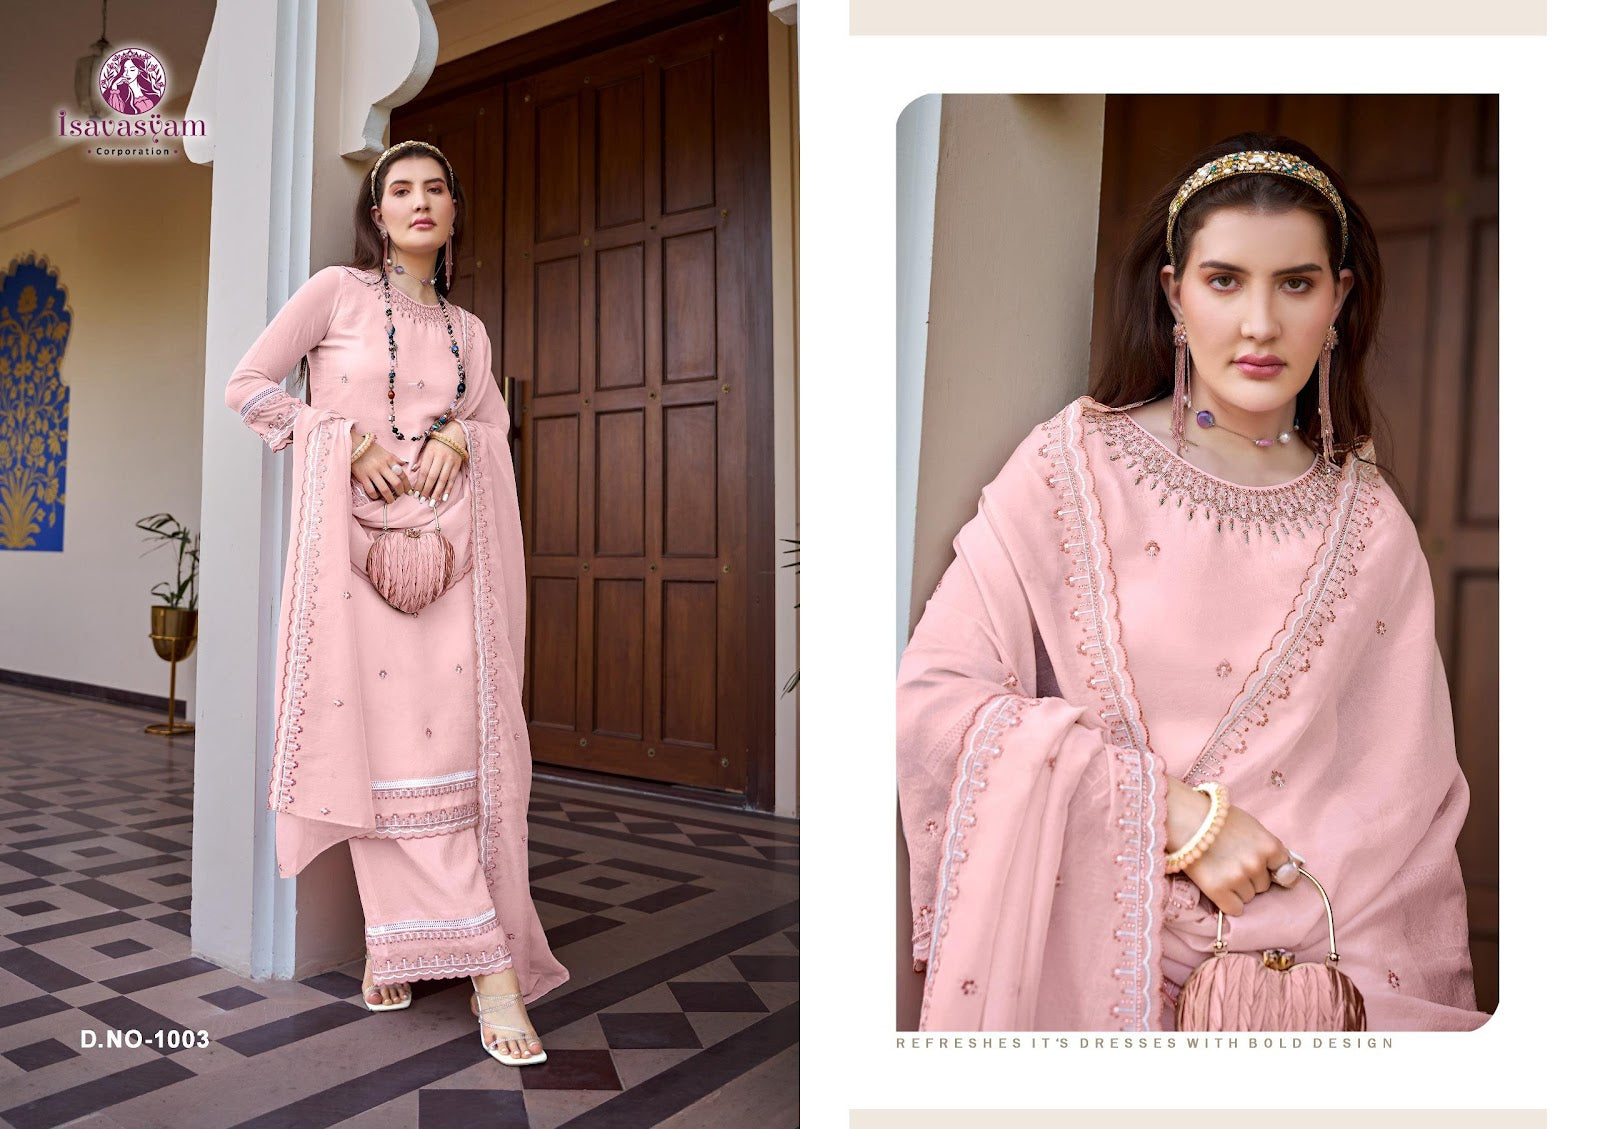 Eid Isavasyam Dola Readymade Plazzo Style Suits